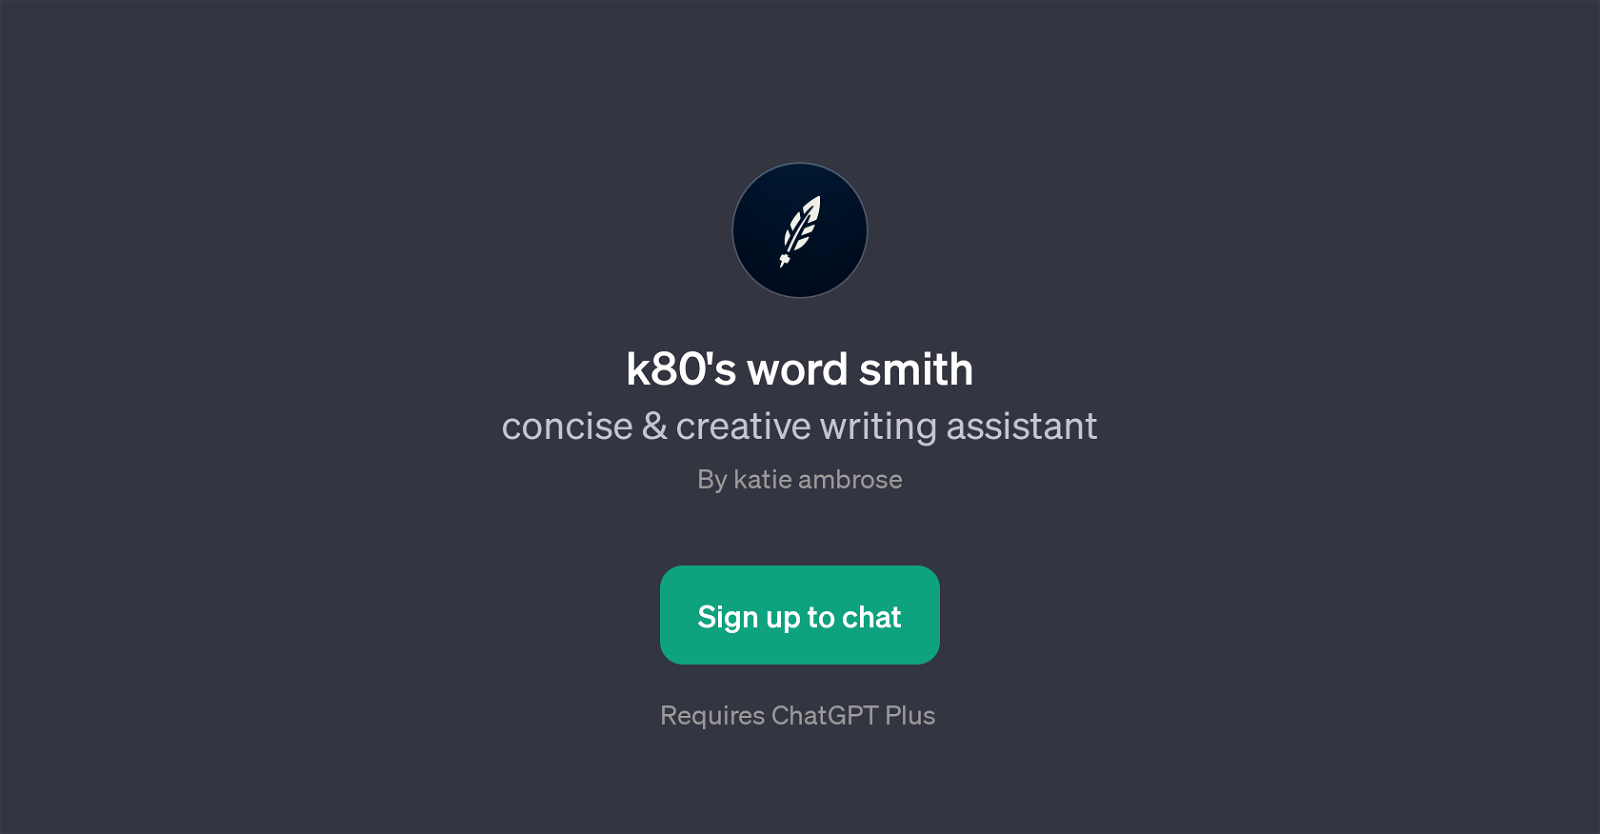 k80's word smith website